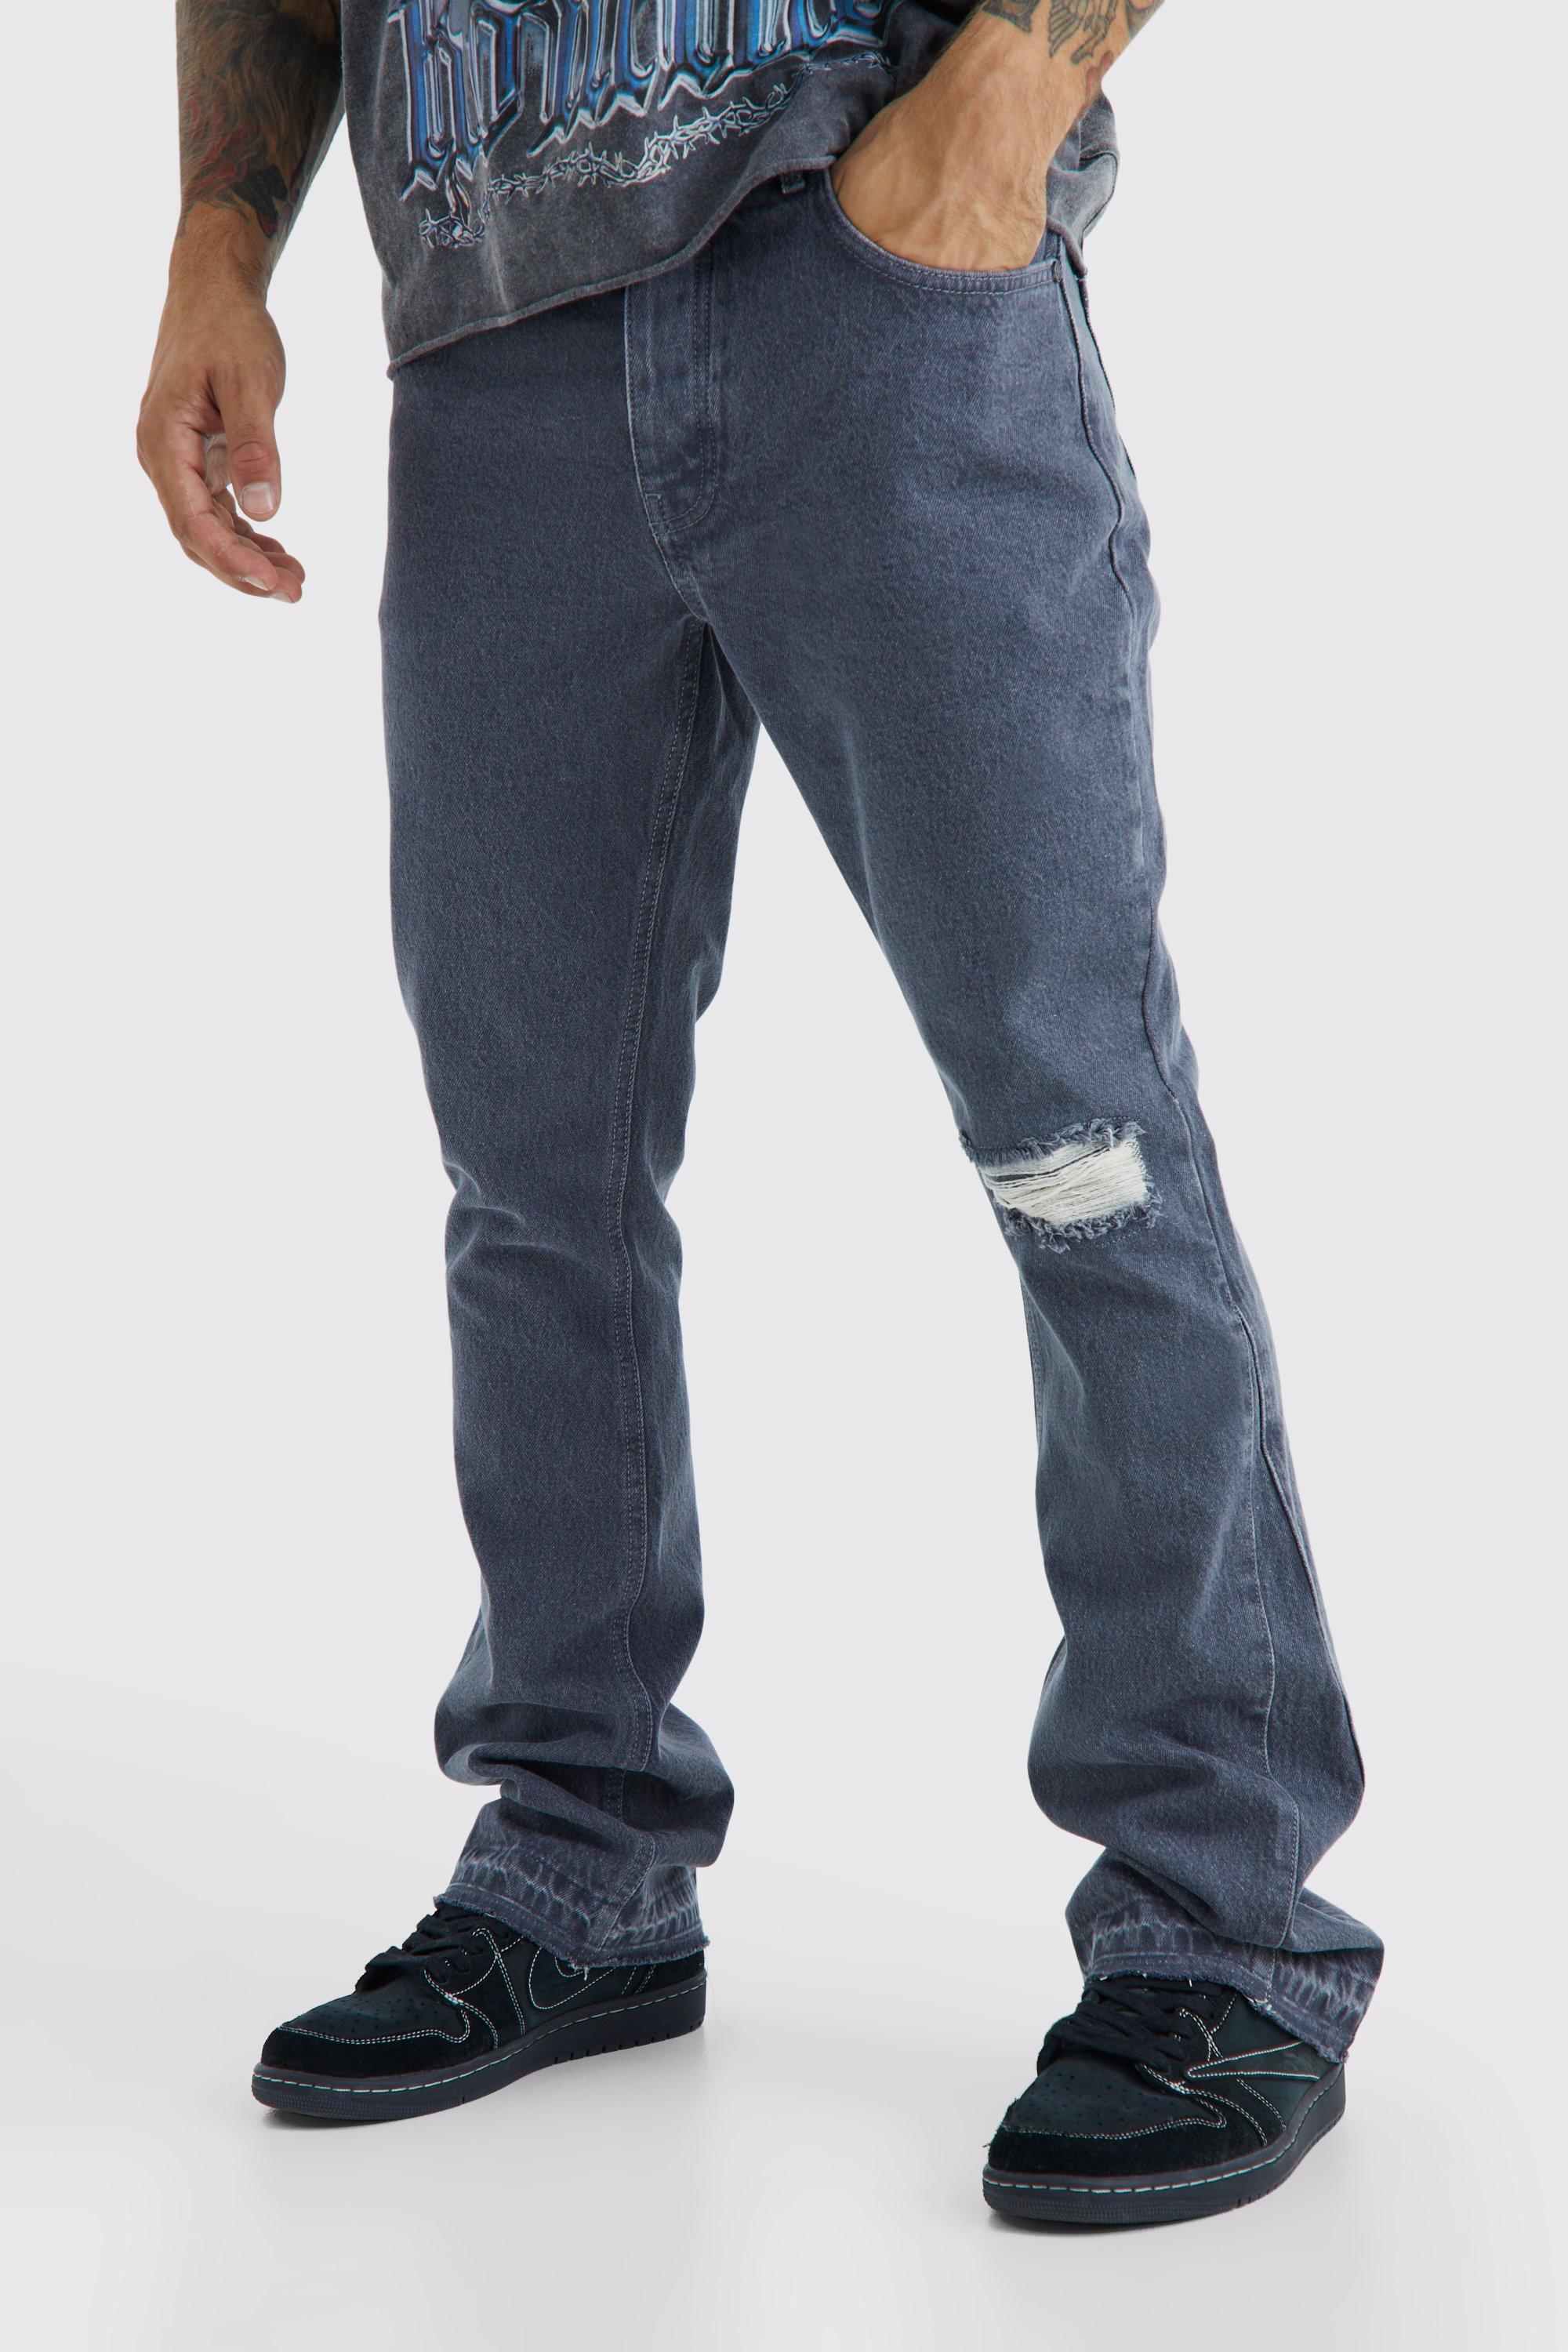 Grey Grey Light & boohooMAN | For USA Jeans | Men Dark Grey Jeans